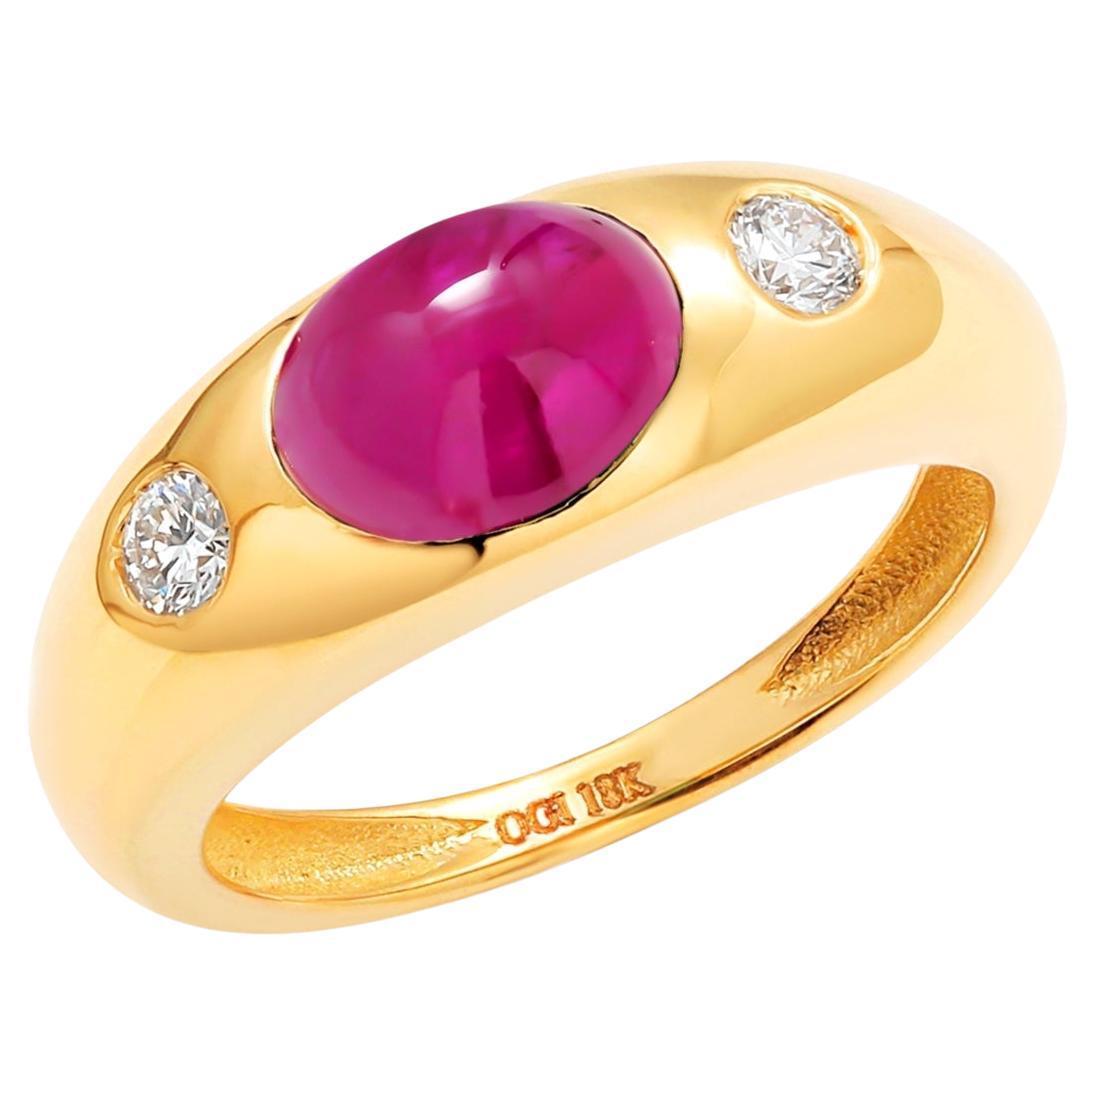 Cabochon Burma Ruby Diamond 2.30 Carat 18 Karat Yellow Gold 3 Stone Ring